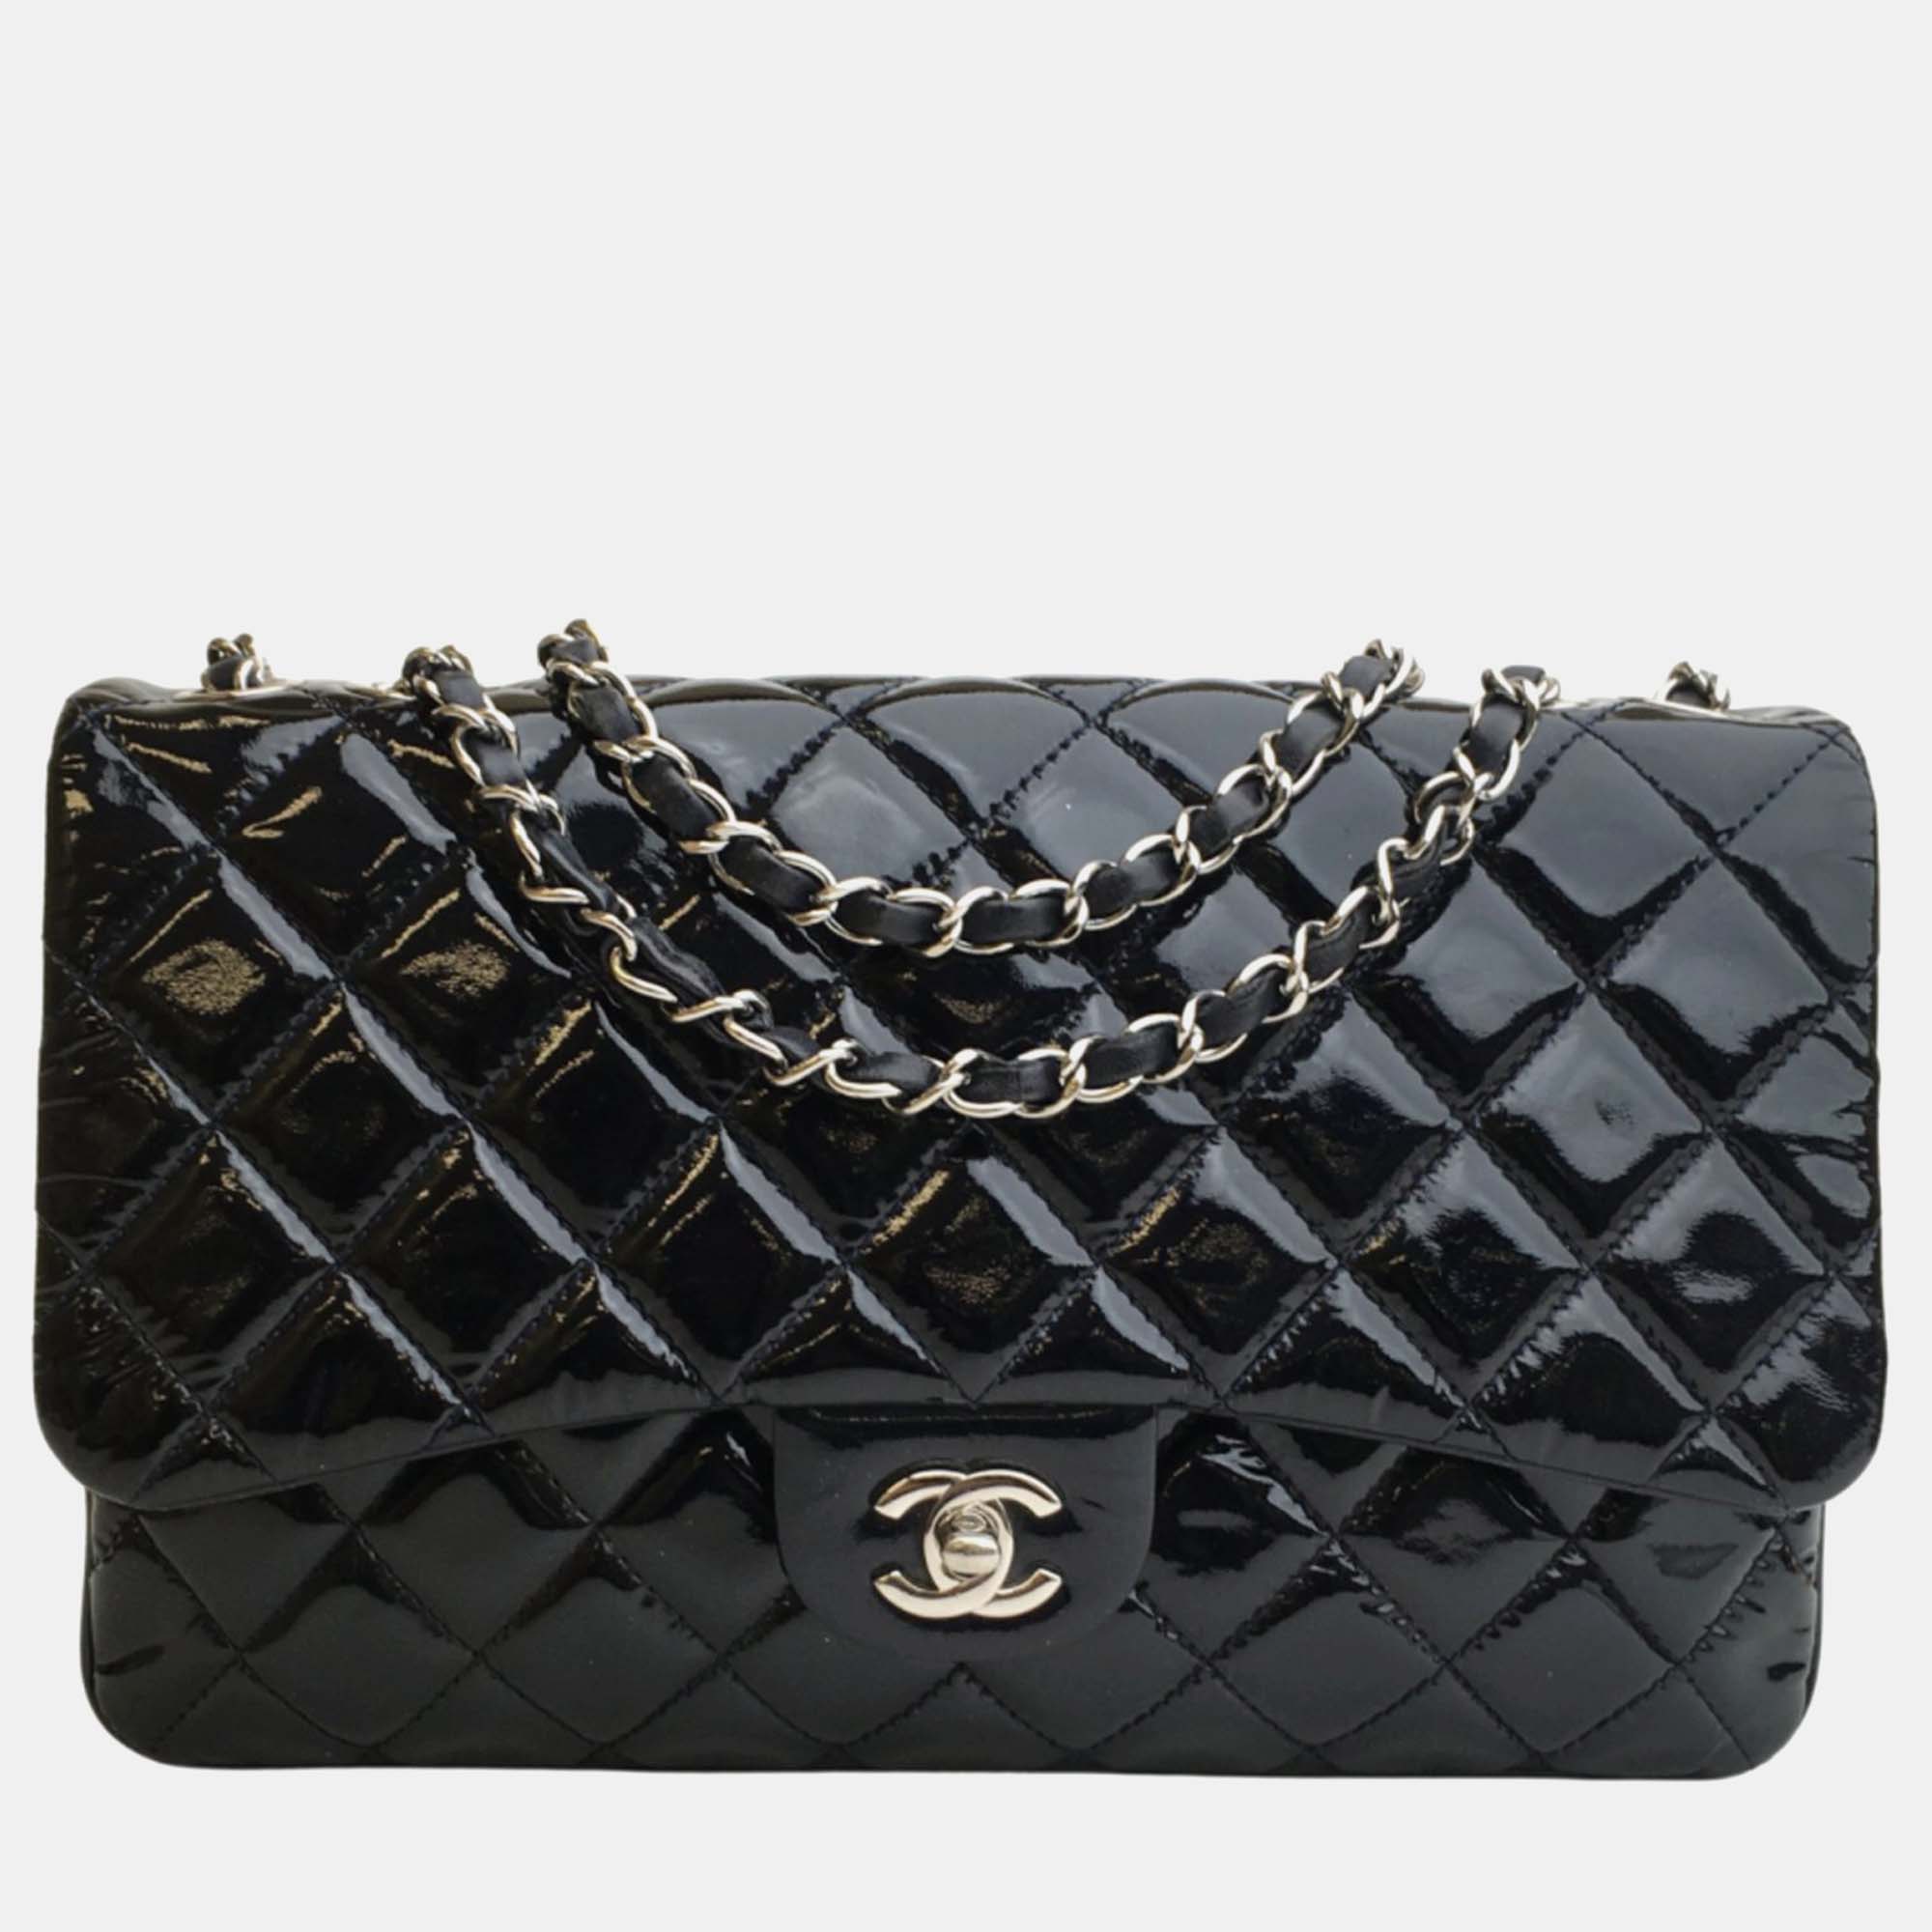 Chanel black patent leather large classic double flap shoulder bag